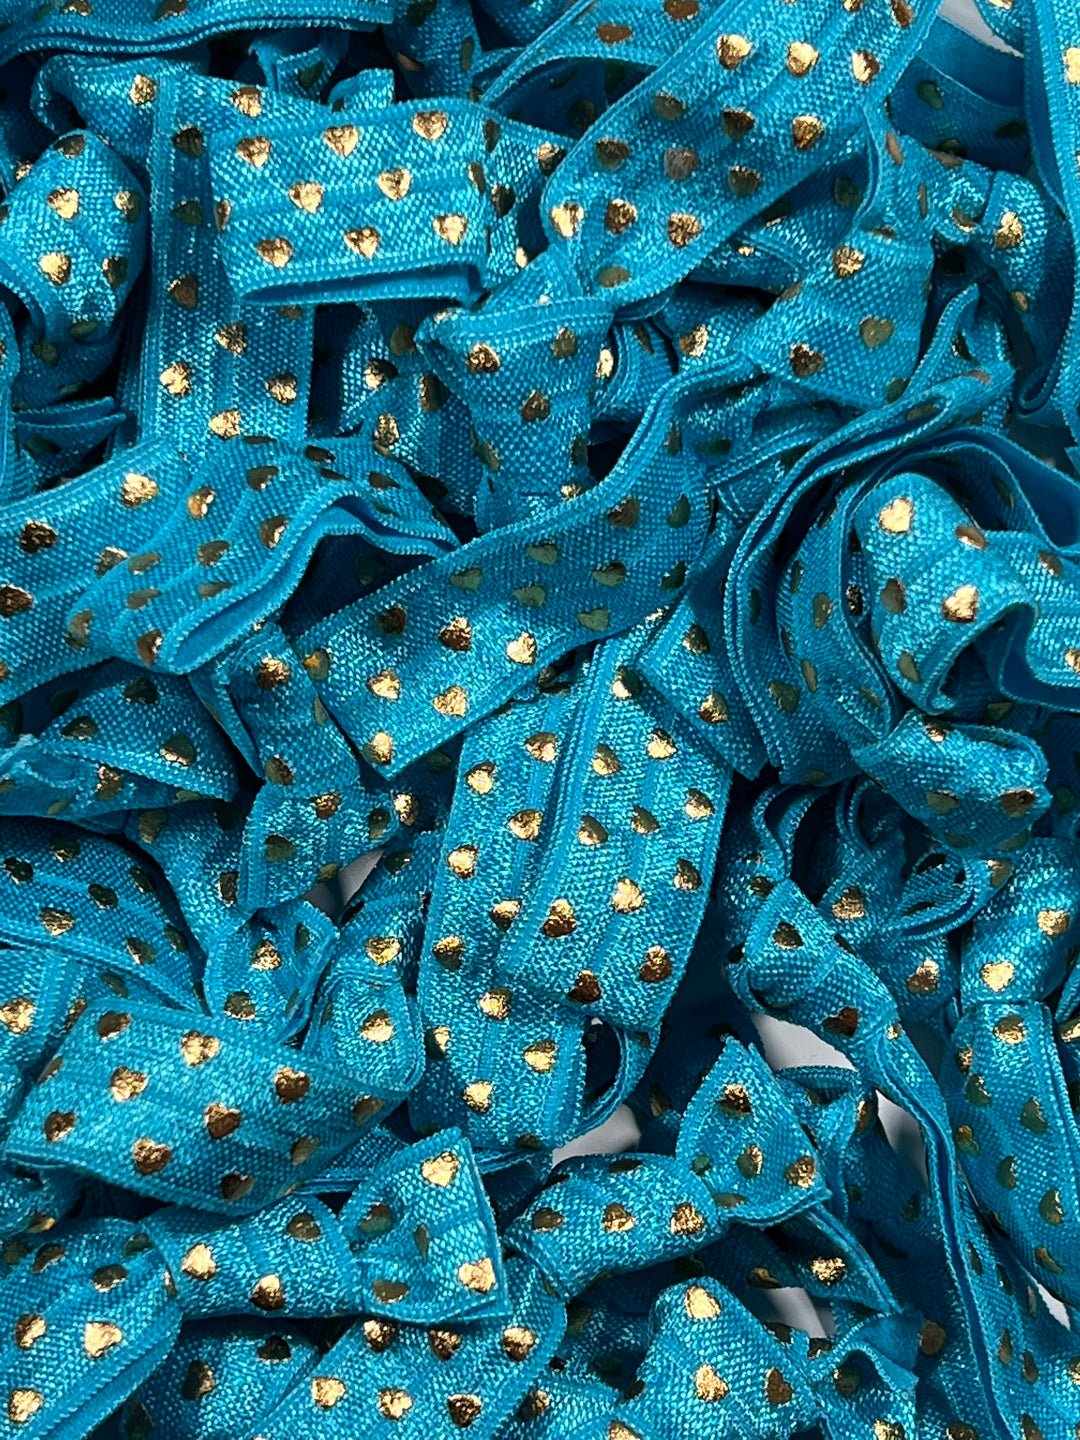 Aqua Blue with Gold Hearts Design Hair Ties